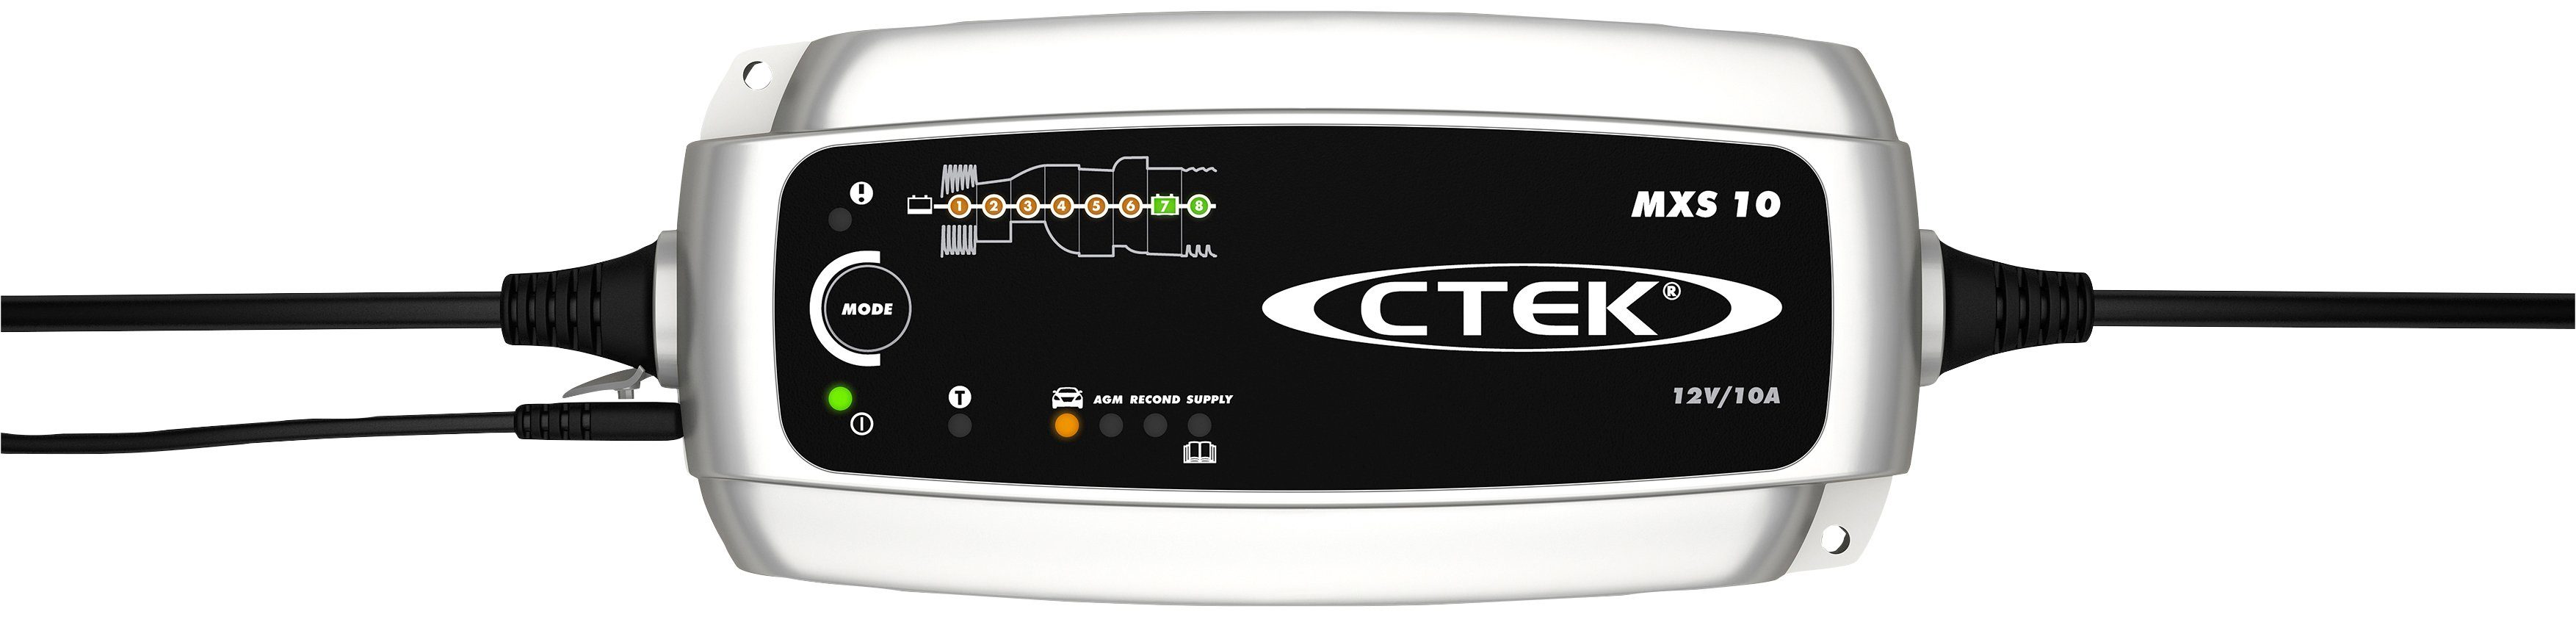 / CTEK Supply-Modus) Batterie-Ladegerät 10 MXS (Versorgungsprogramm